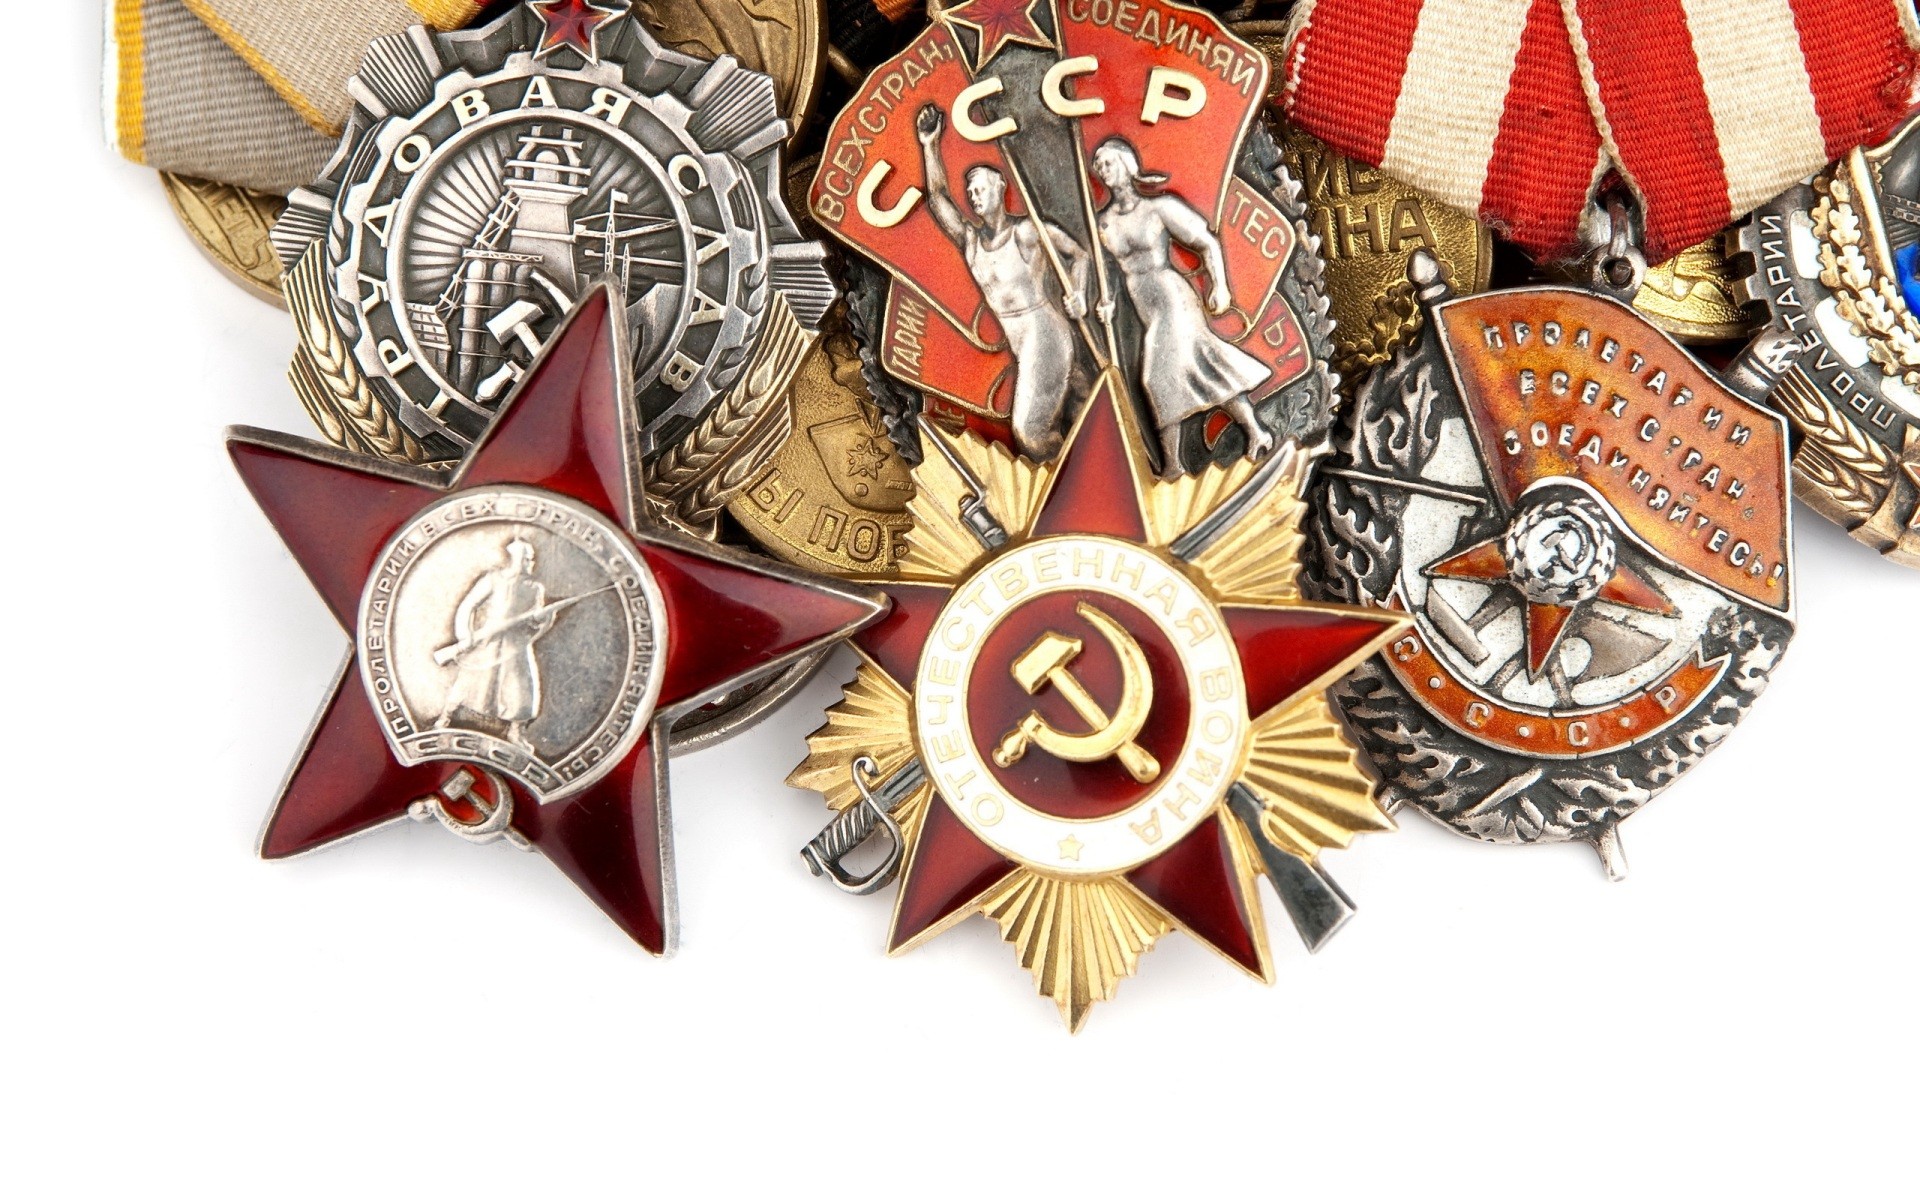 Download the Russian War Medals Wallpaper, Russian War Medals iPhone ...